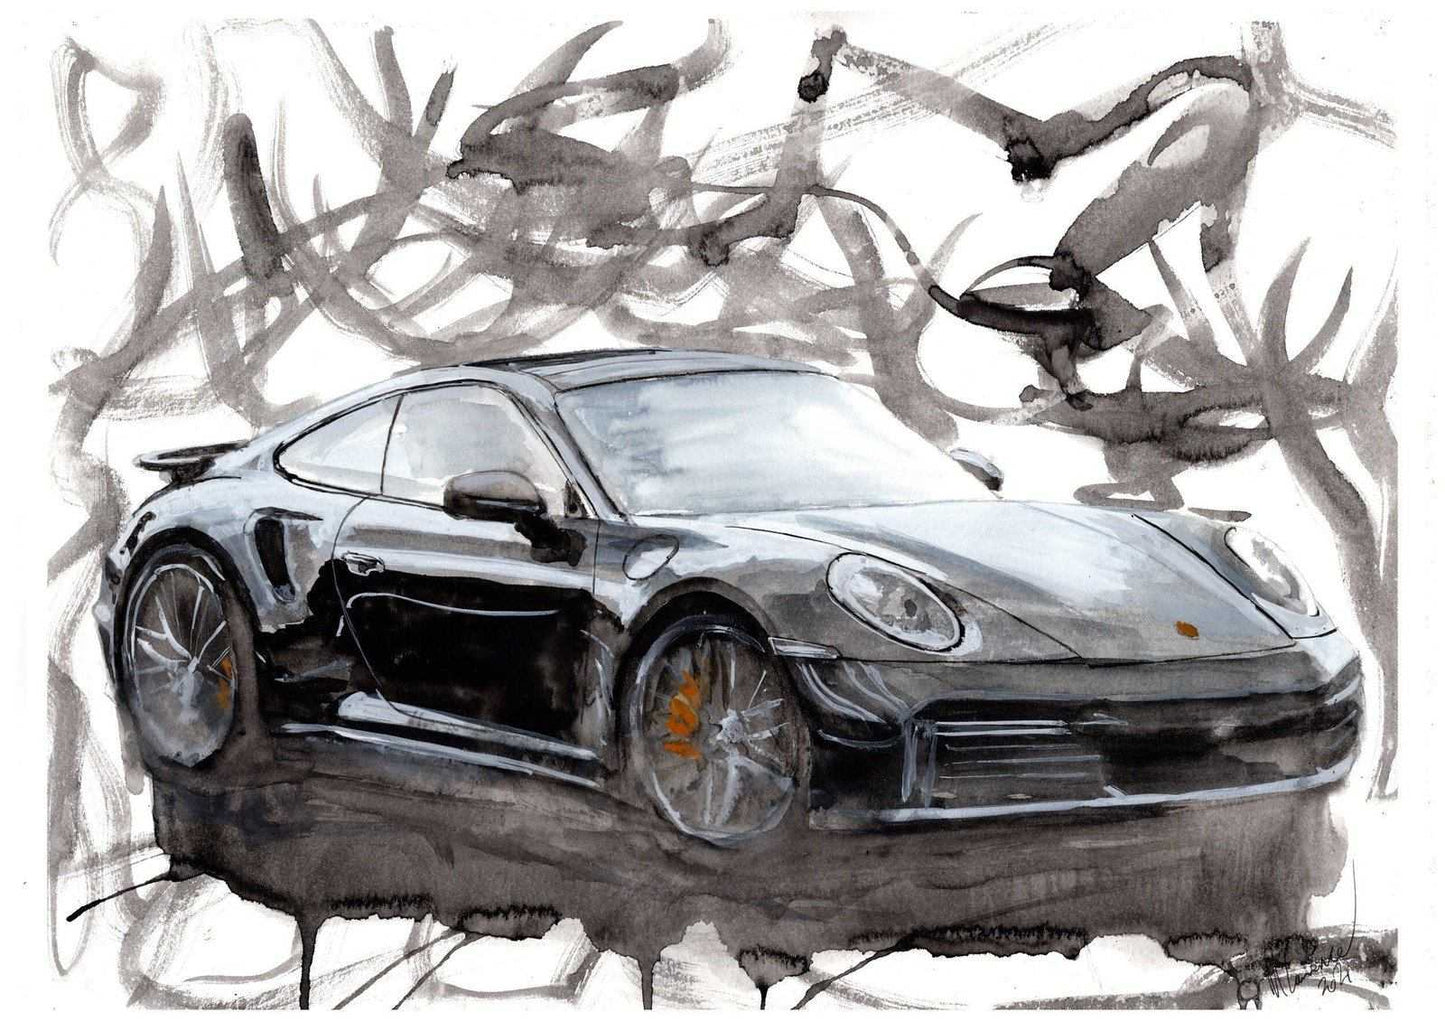 Porsche 911 Print Watercolour Painting 2020 Limited Print ArtbyMyleslaurence